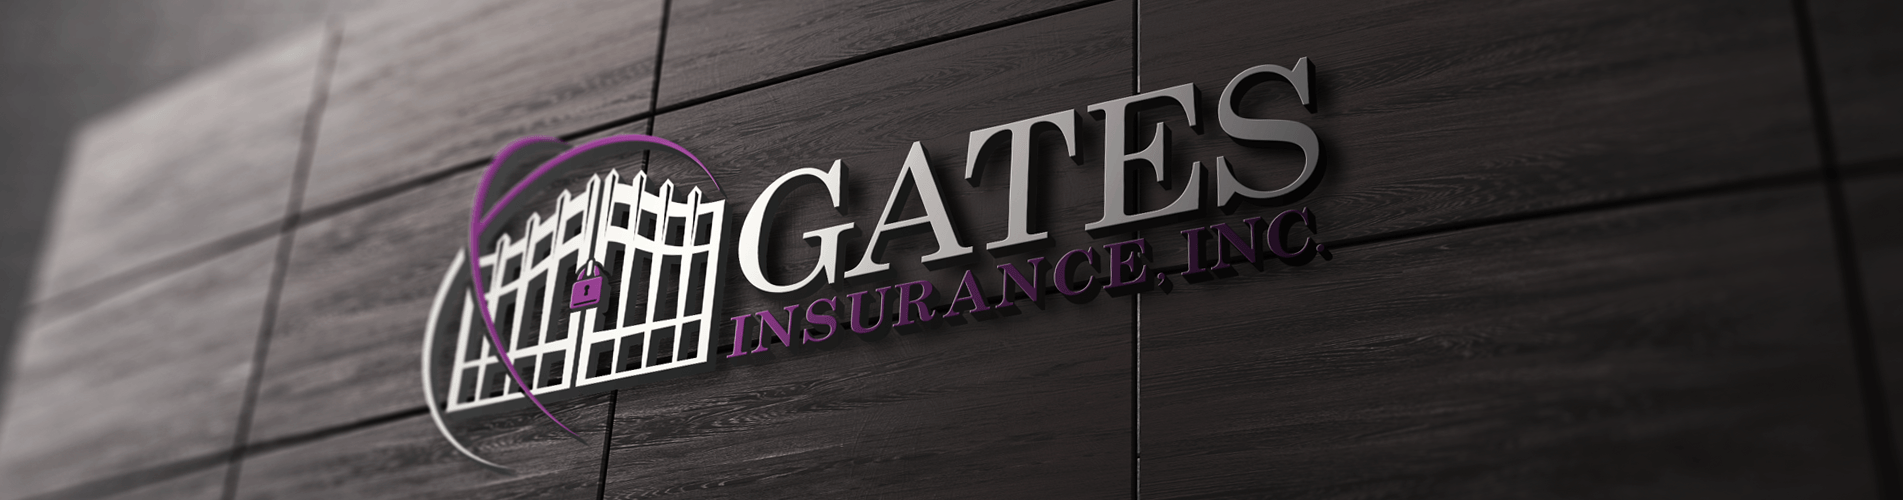 Gates Logo - Commercial & Business Insurance Insurance Inc